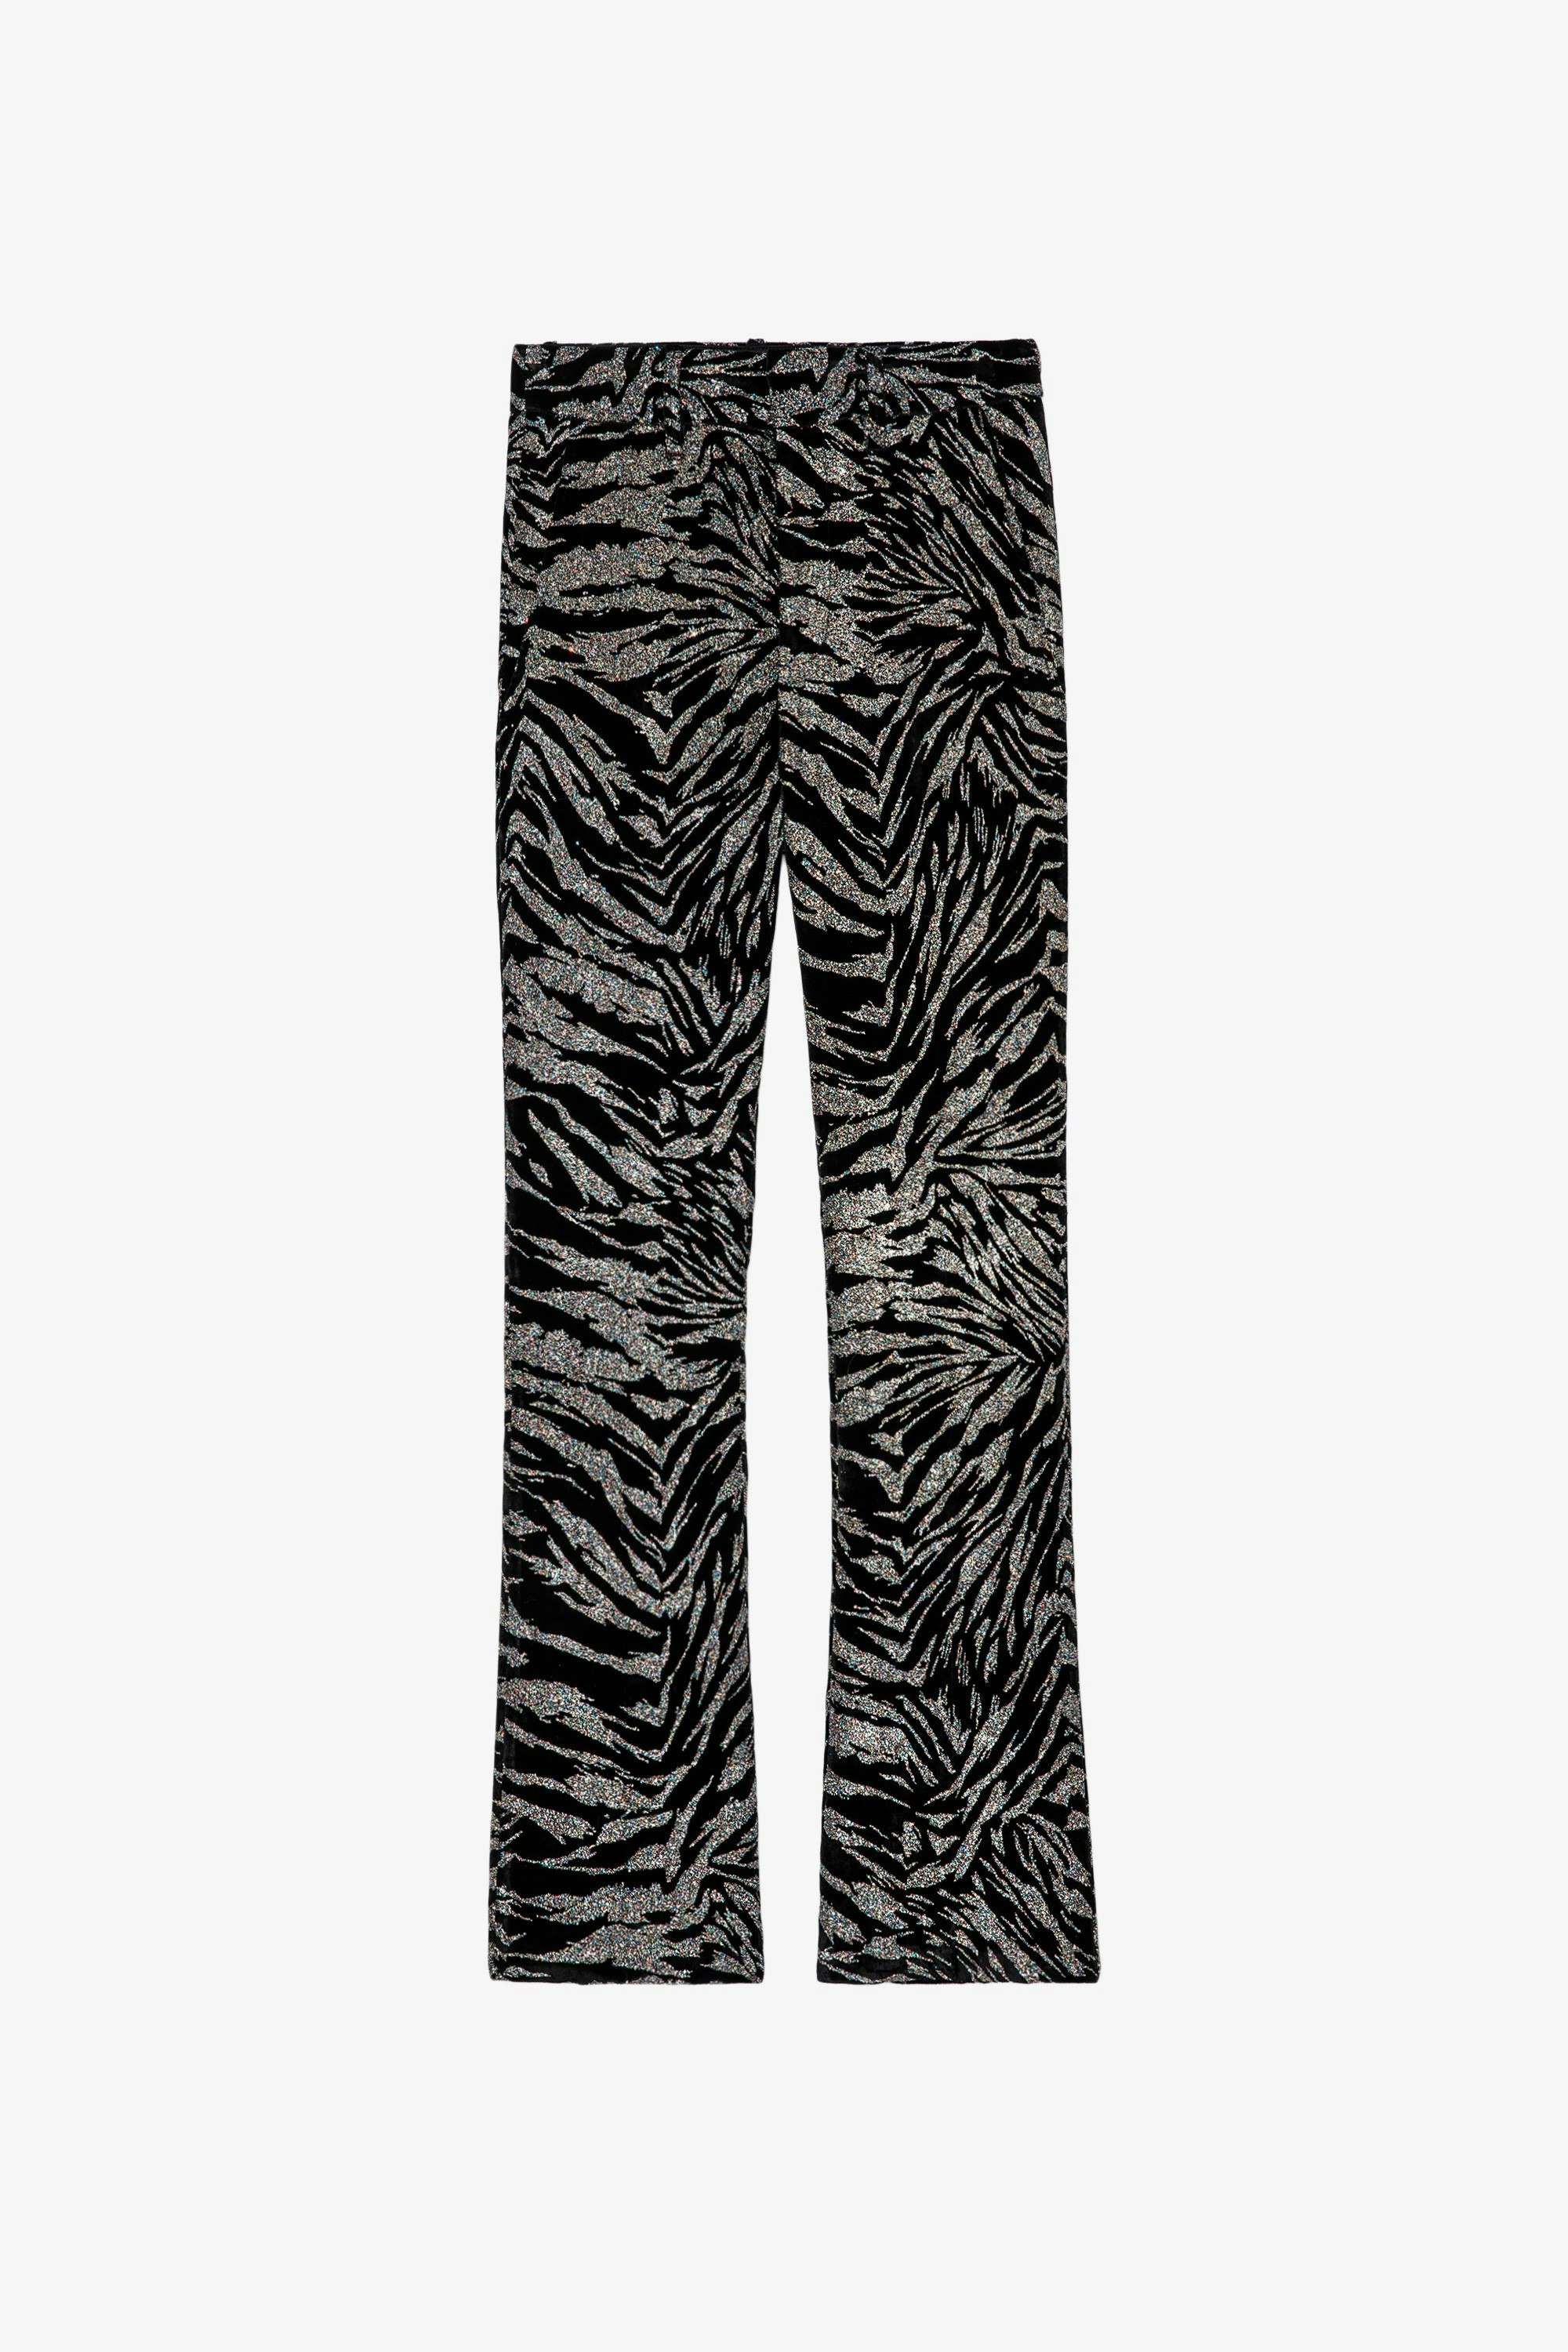 Polis パンツ Women’s velvet trousers with a glittery motif 